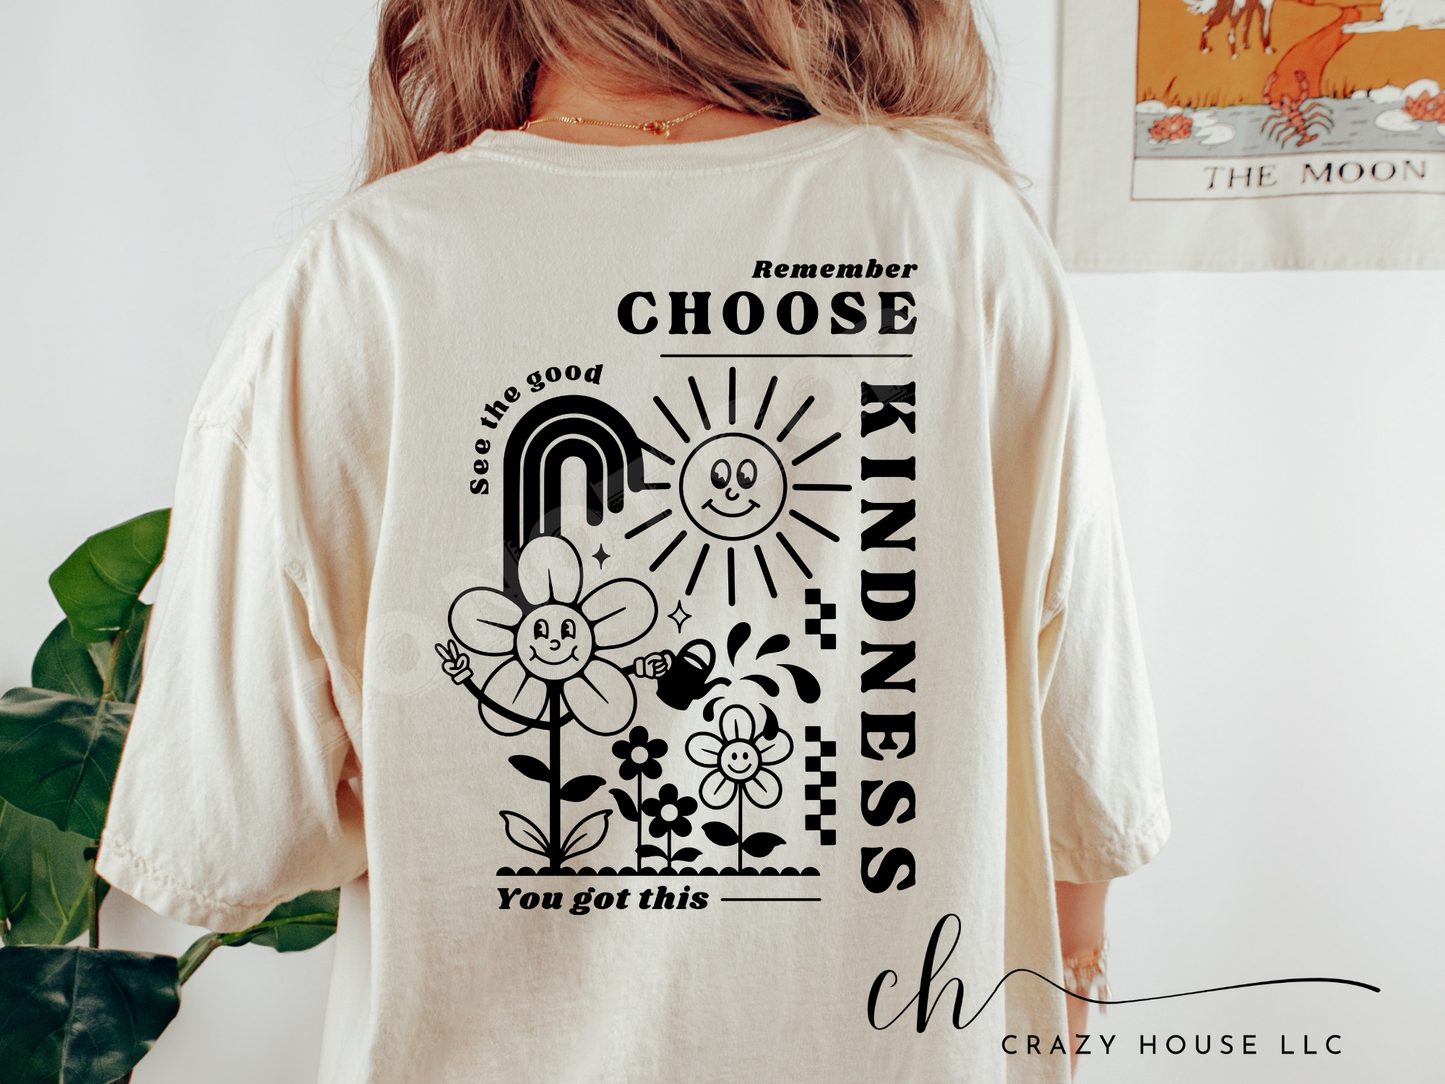 West Boulevard Private Event : Choose Kindness Shirt